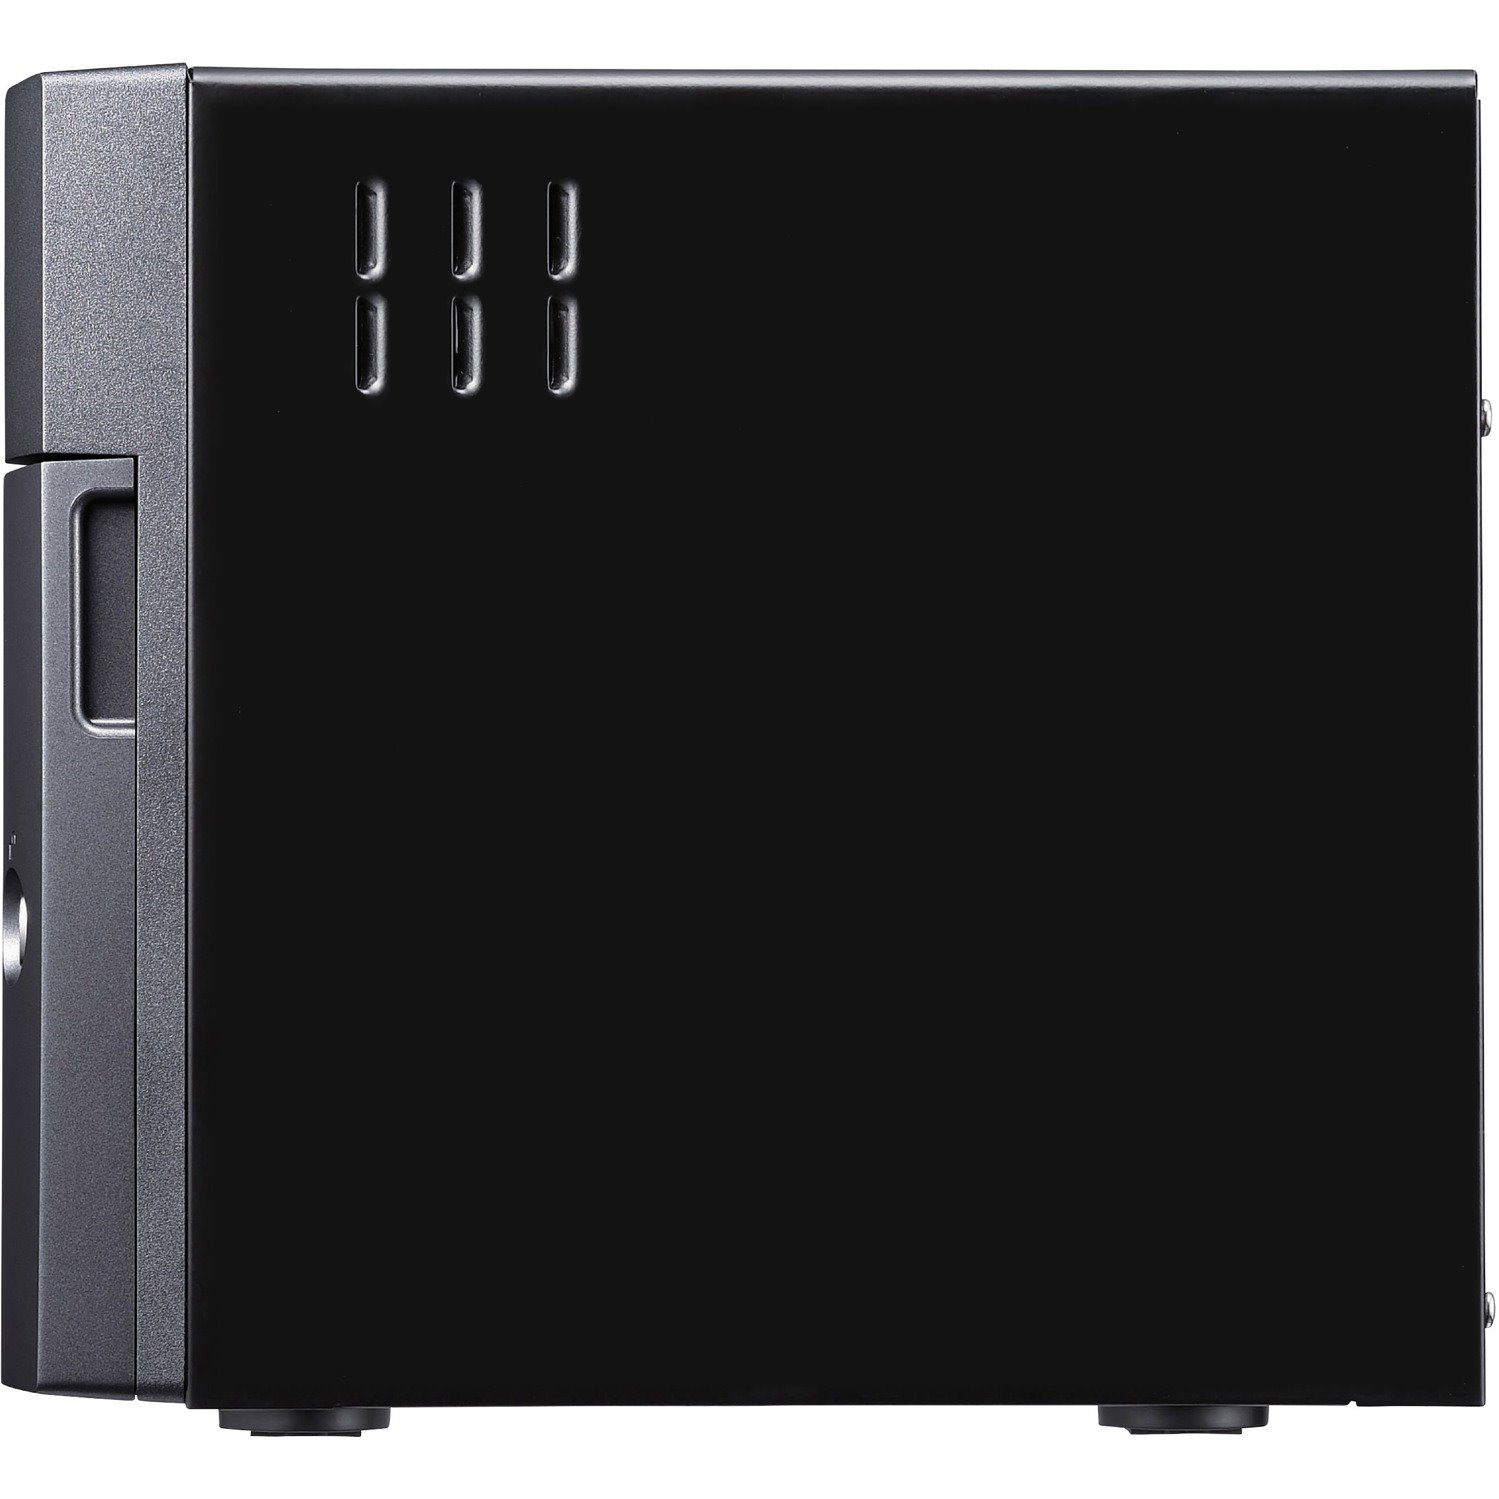 BUFFALO TeraStation 5420 4-Bay 16TB (4x4TB) Business Desktop NAS Storage Hard Drives Included